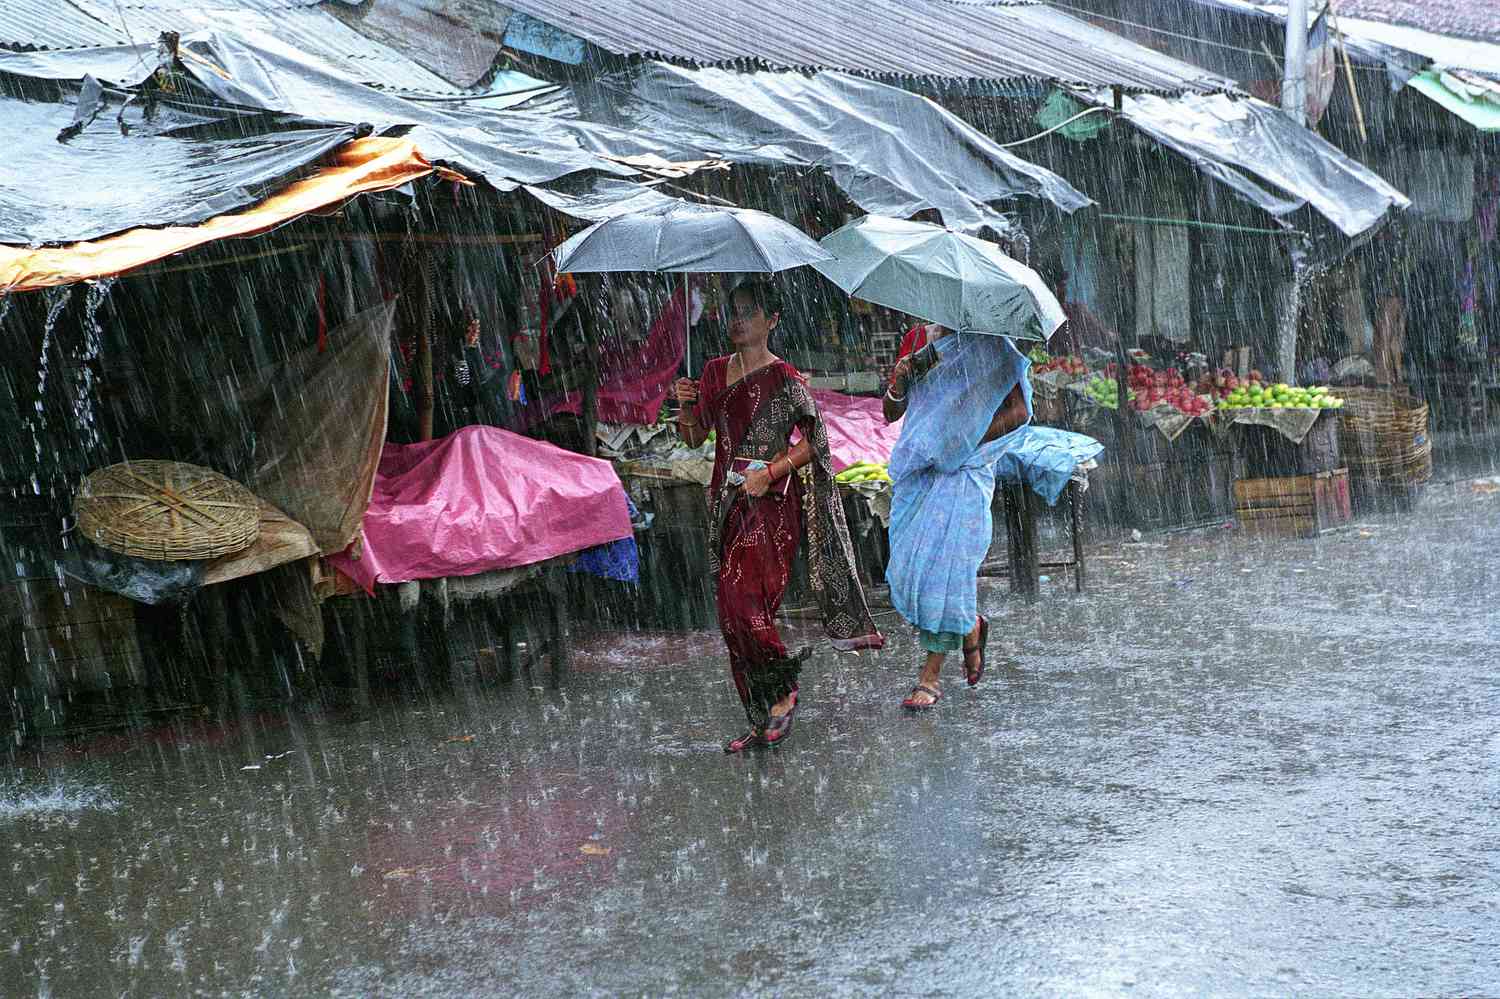 monsoon season in India